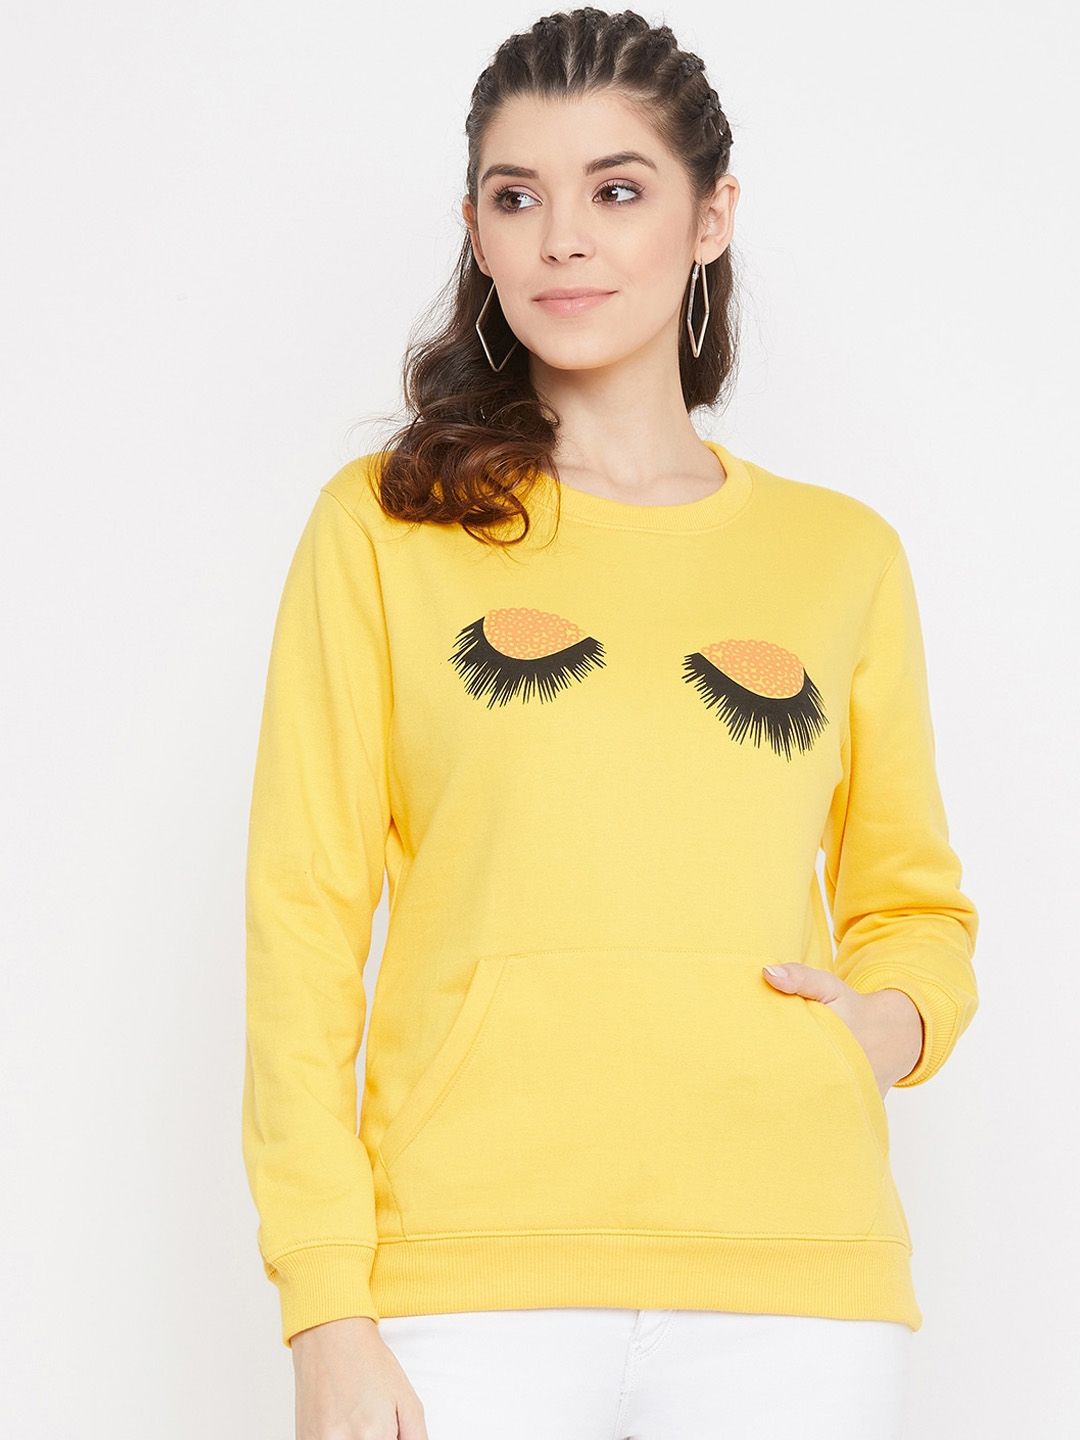 Bishop Cotton Women Yellow Solid Sweatshirt Price in India